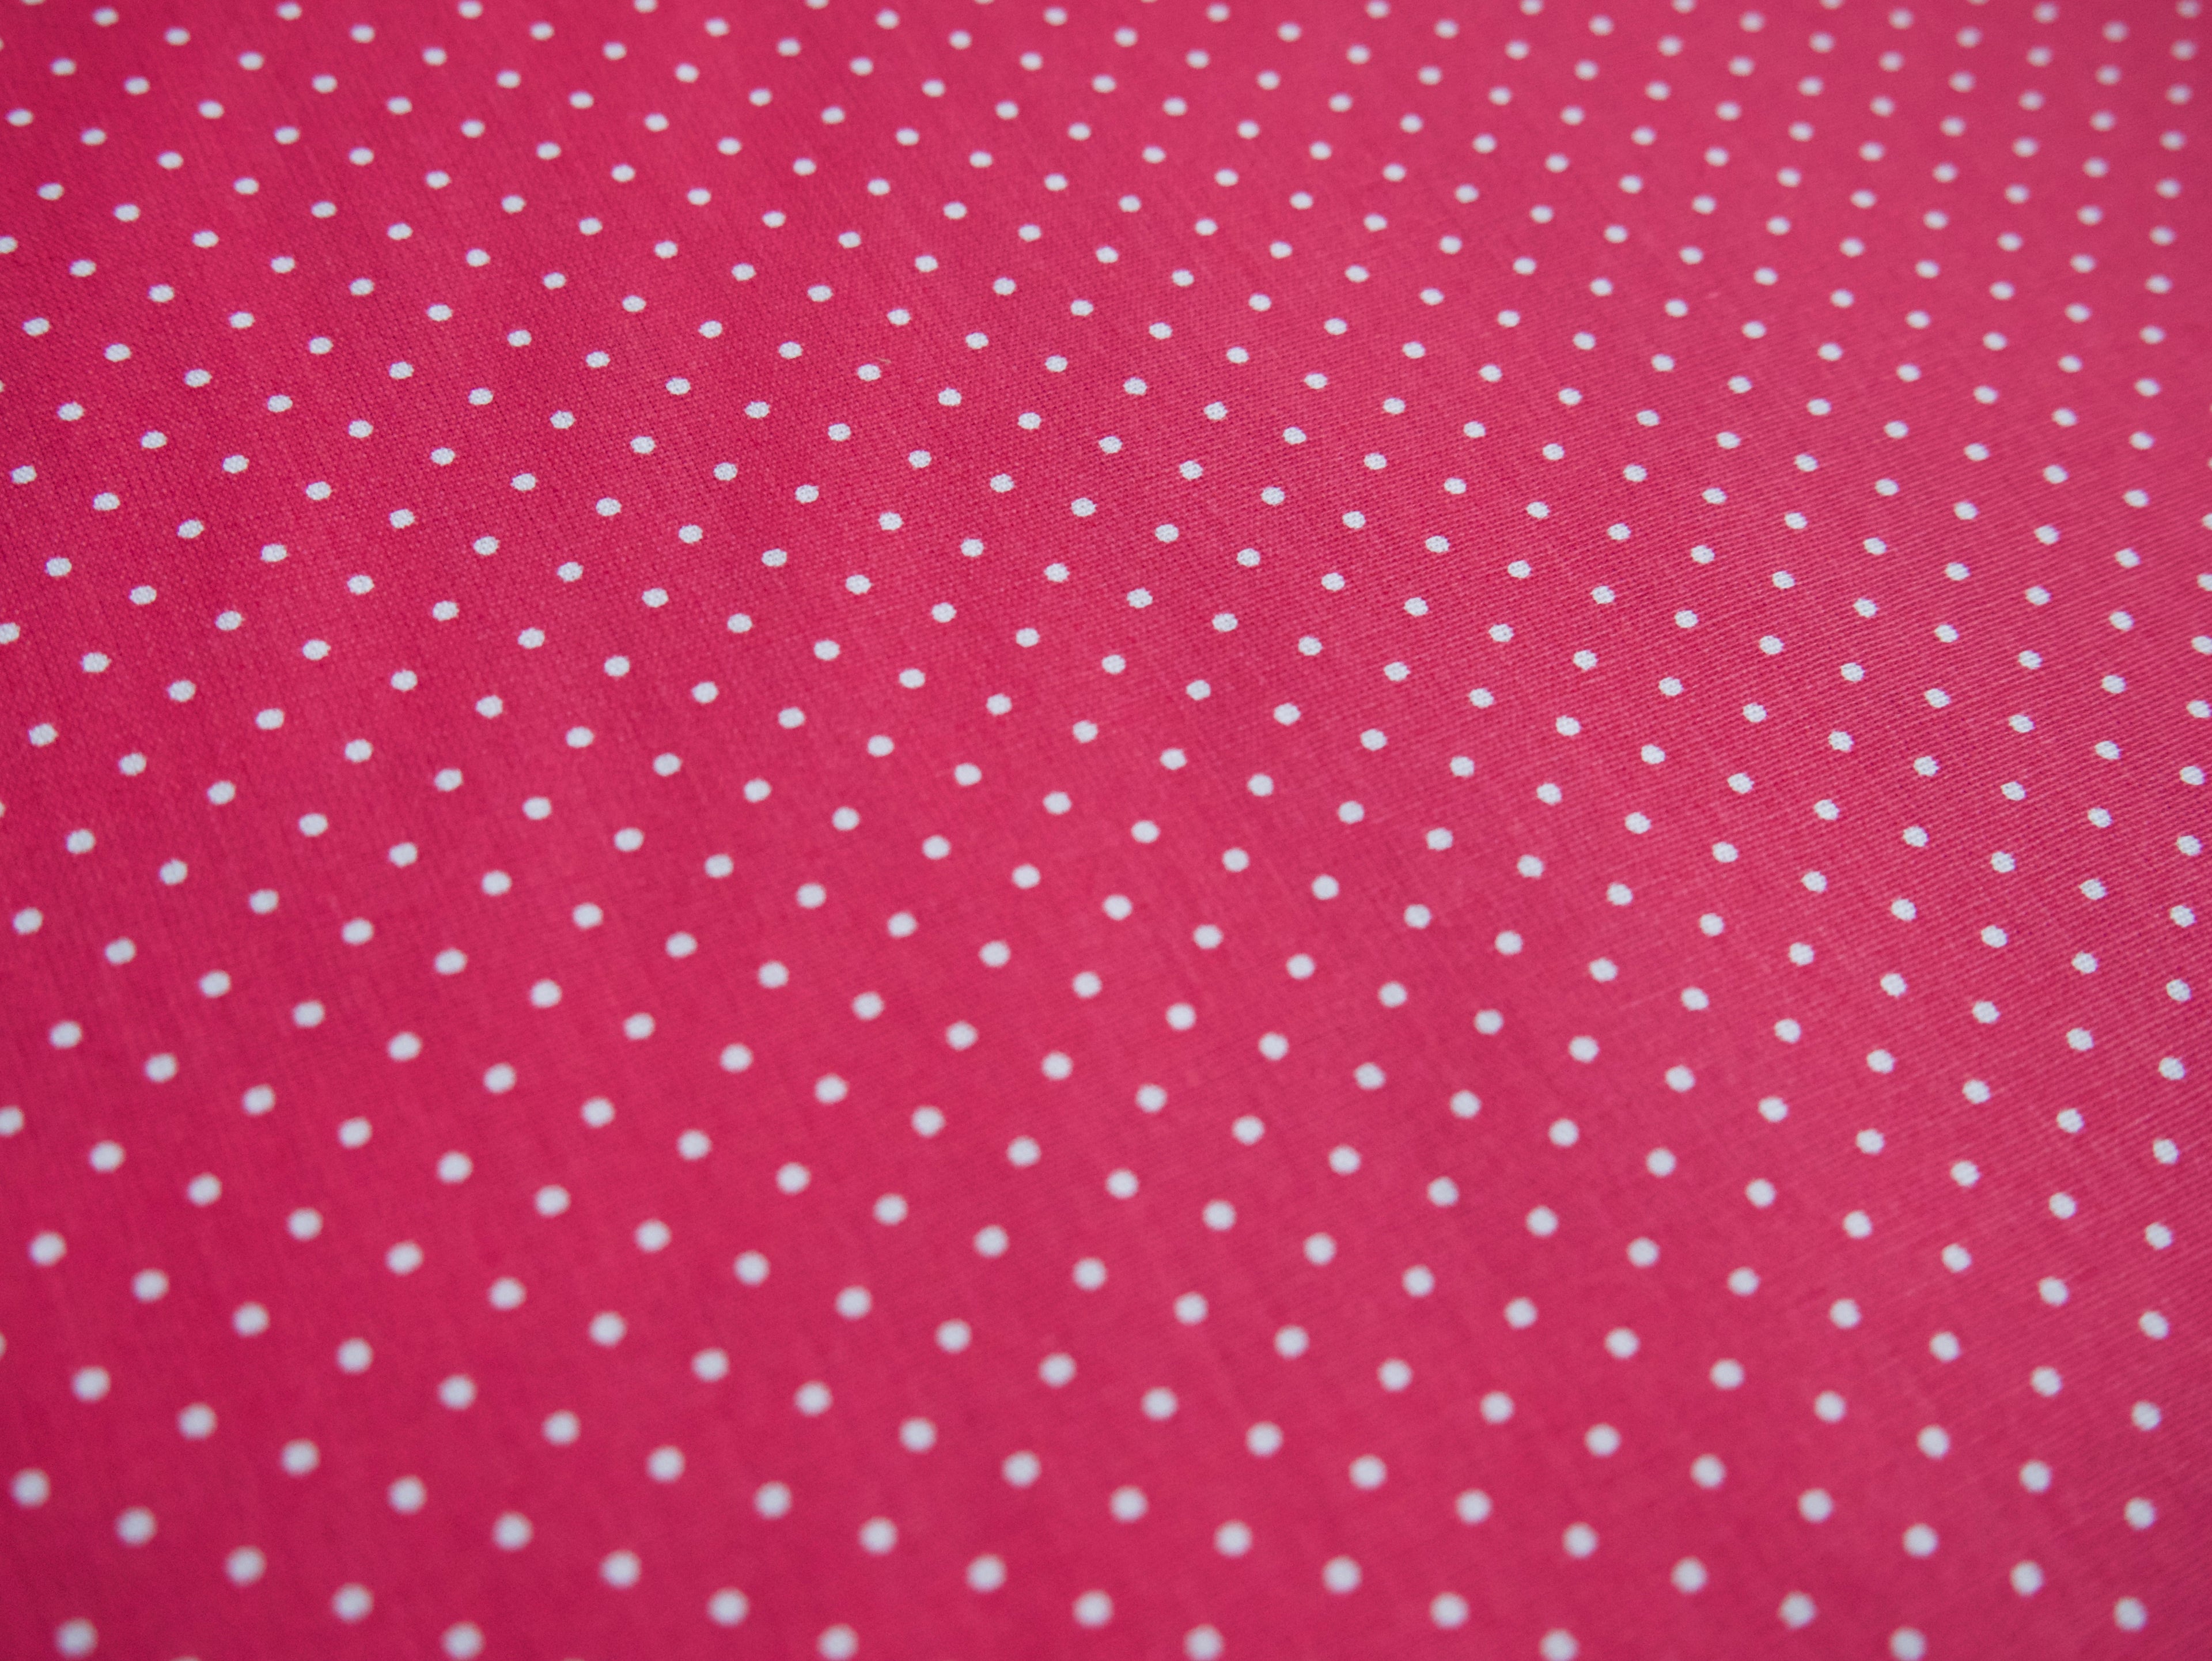 Pin-Spot Printed Cotton, Cerise £8.50 p/m-Fabric-Flying Bobbins Haberdashery